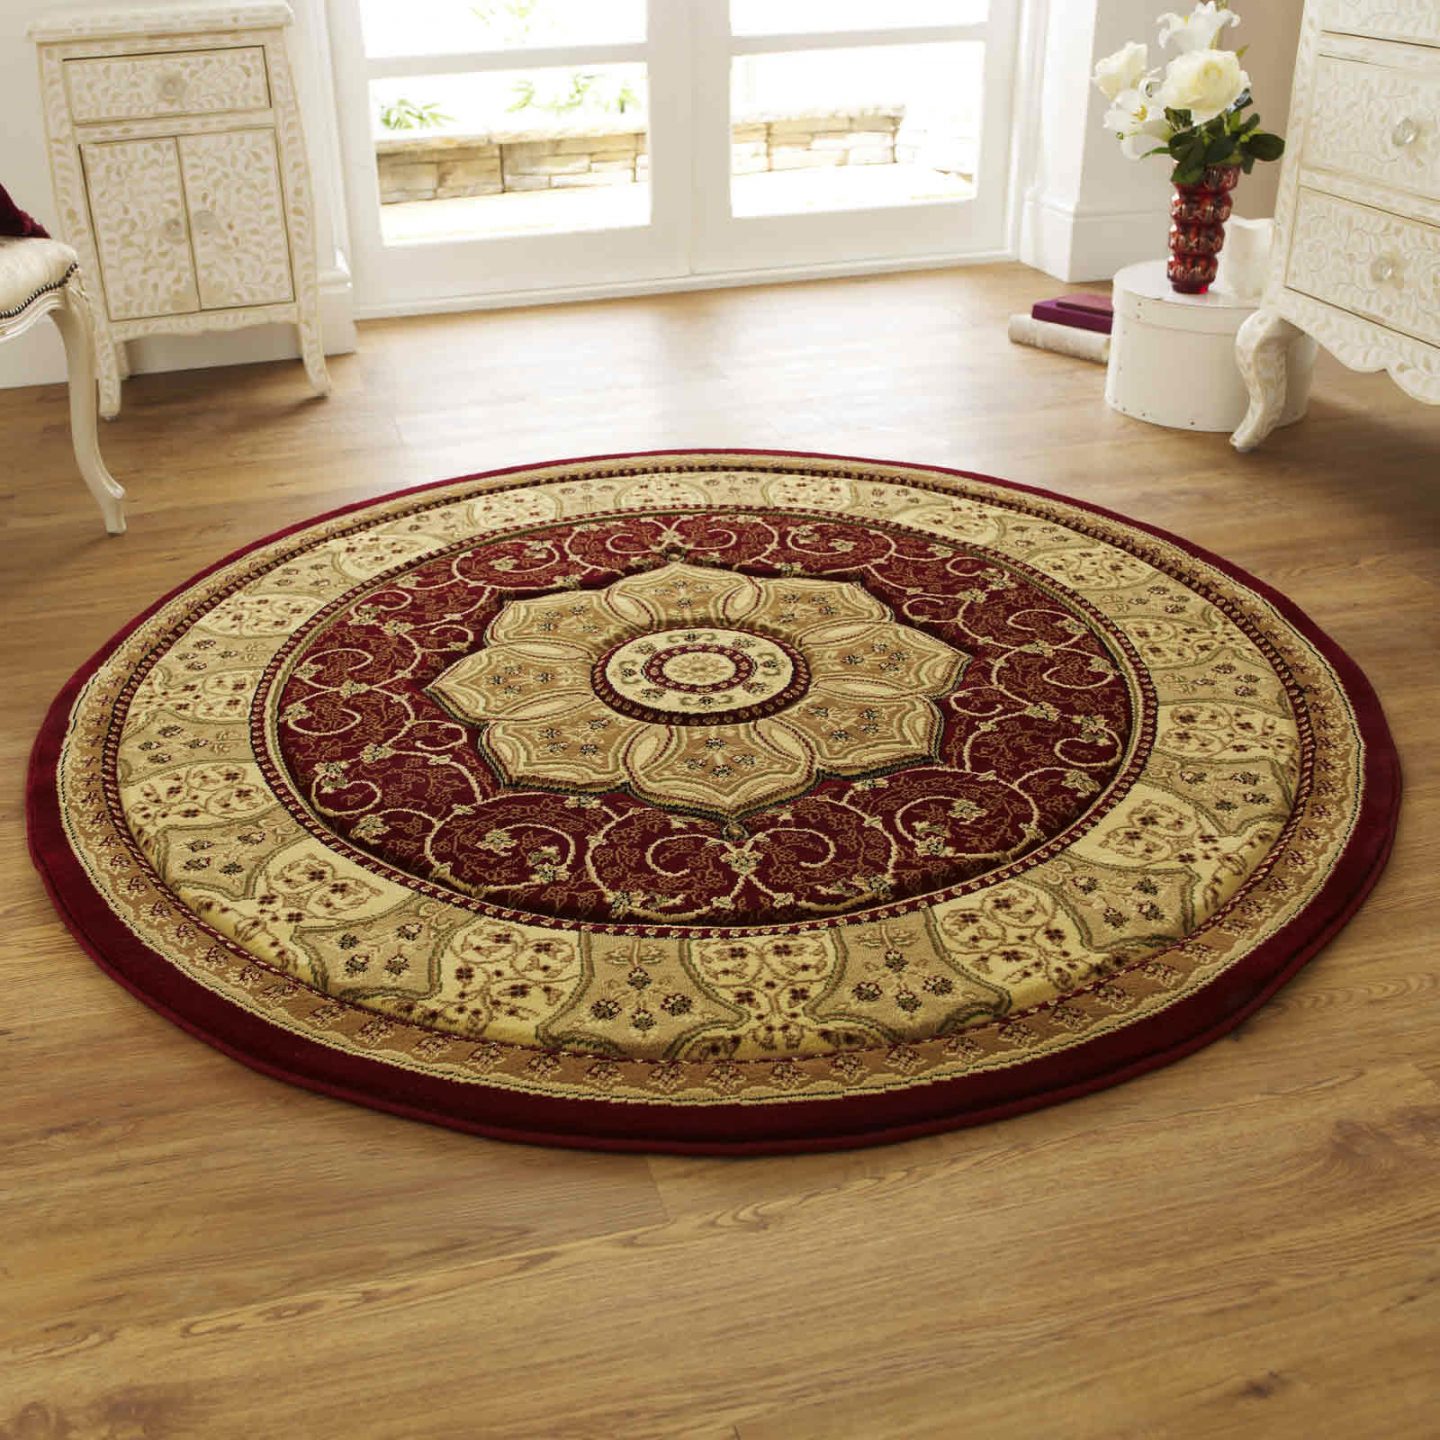 Wonderful ideas of circular rugs